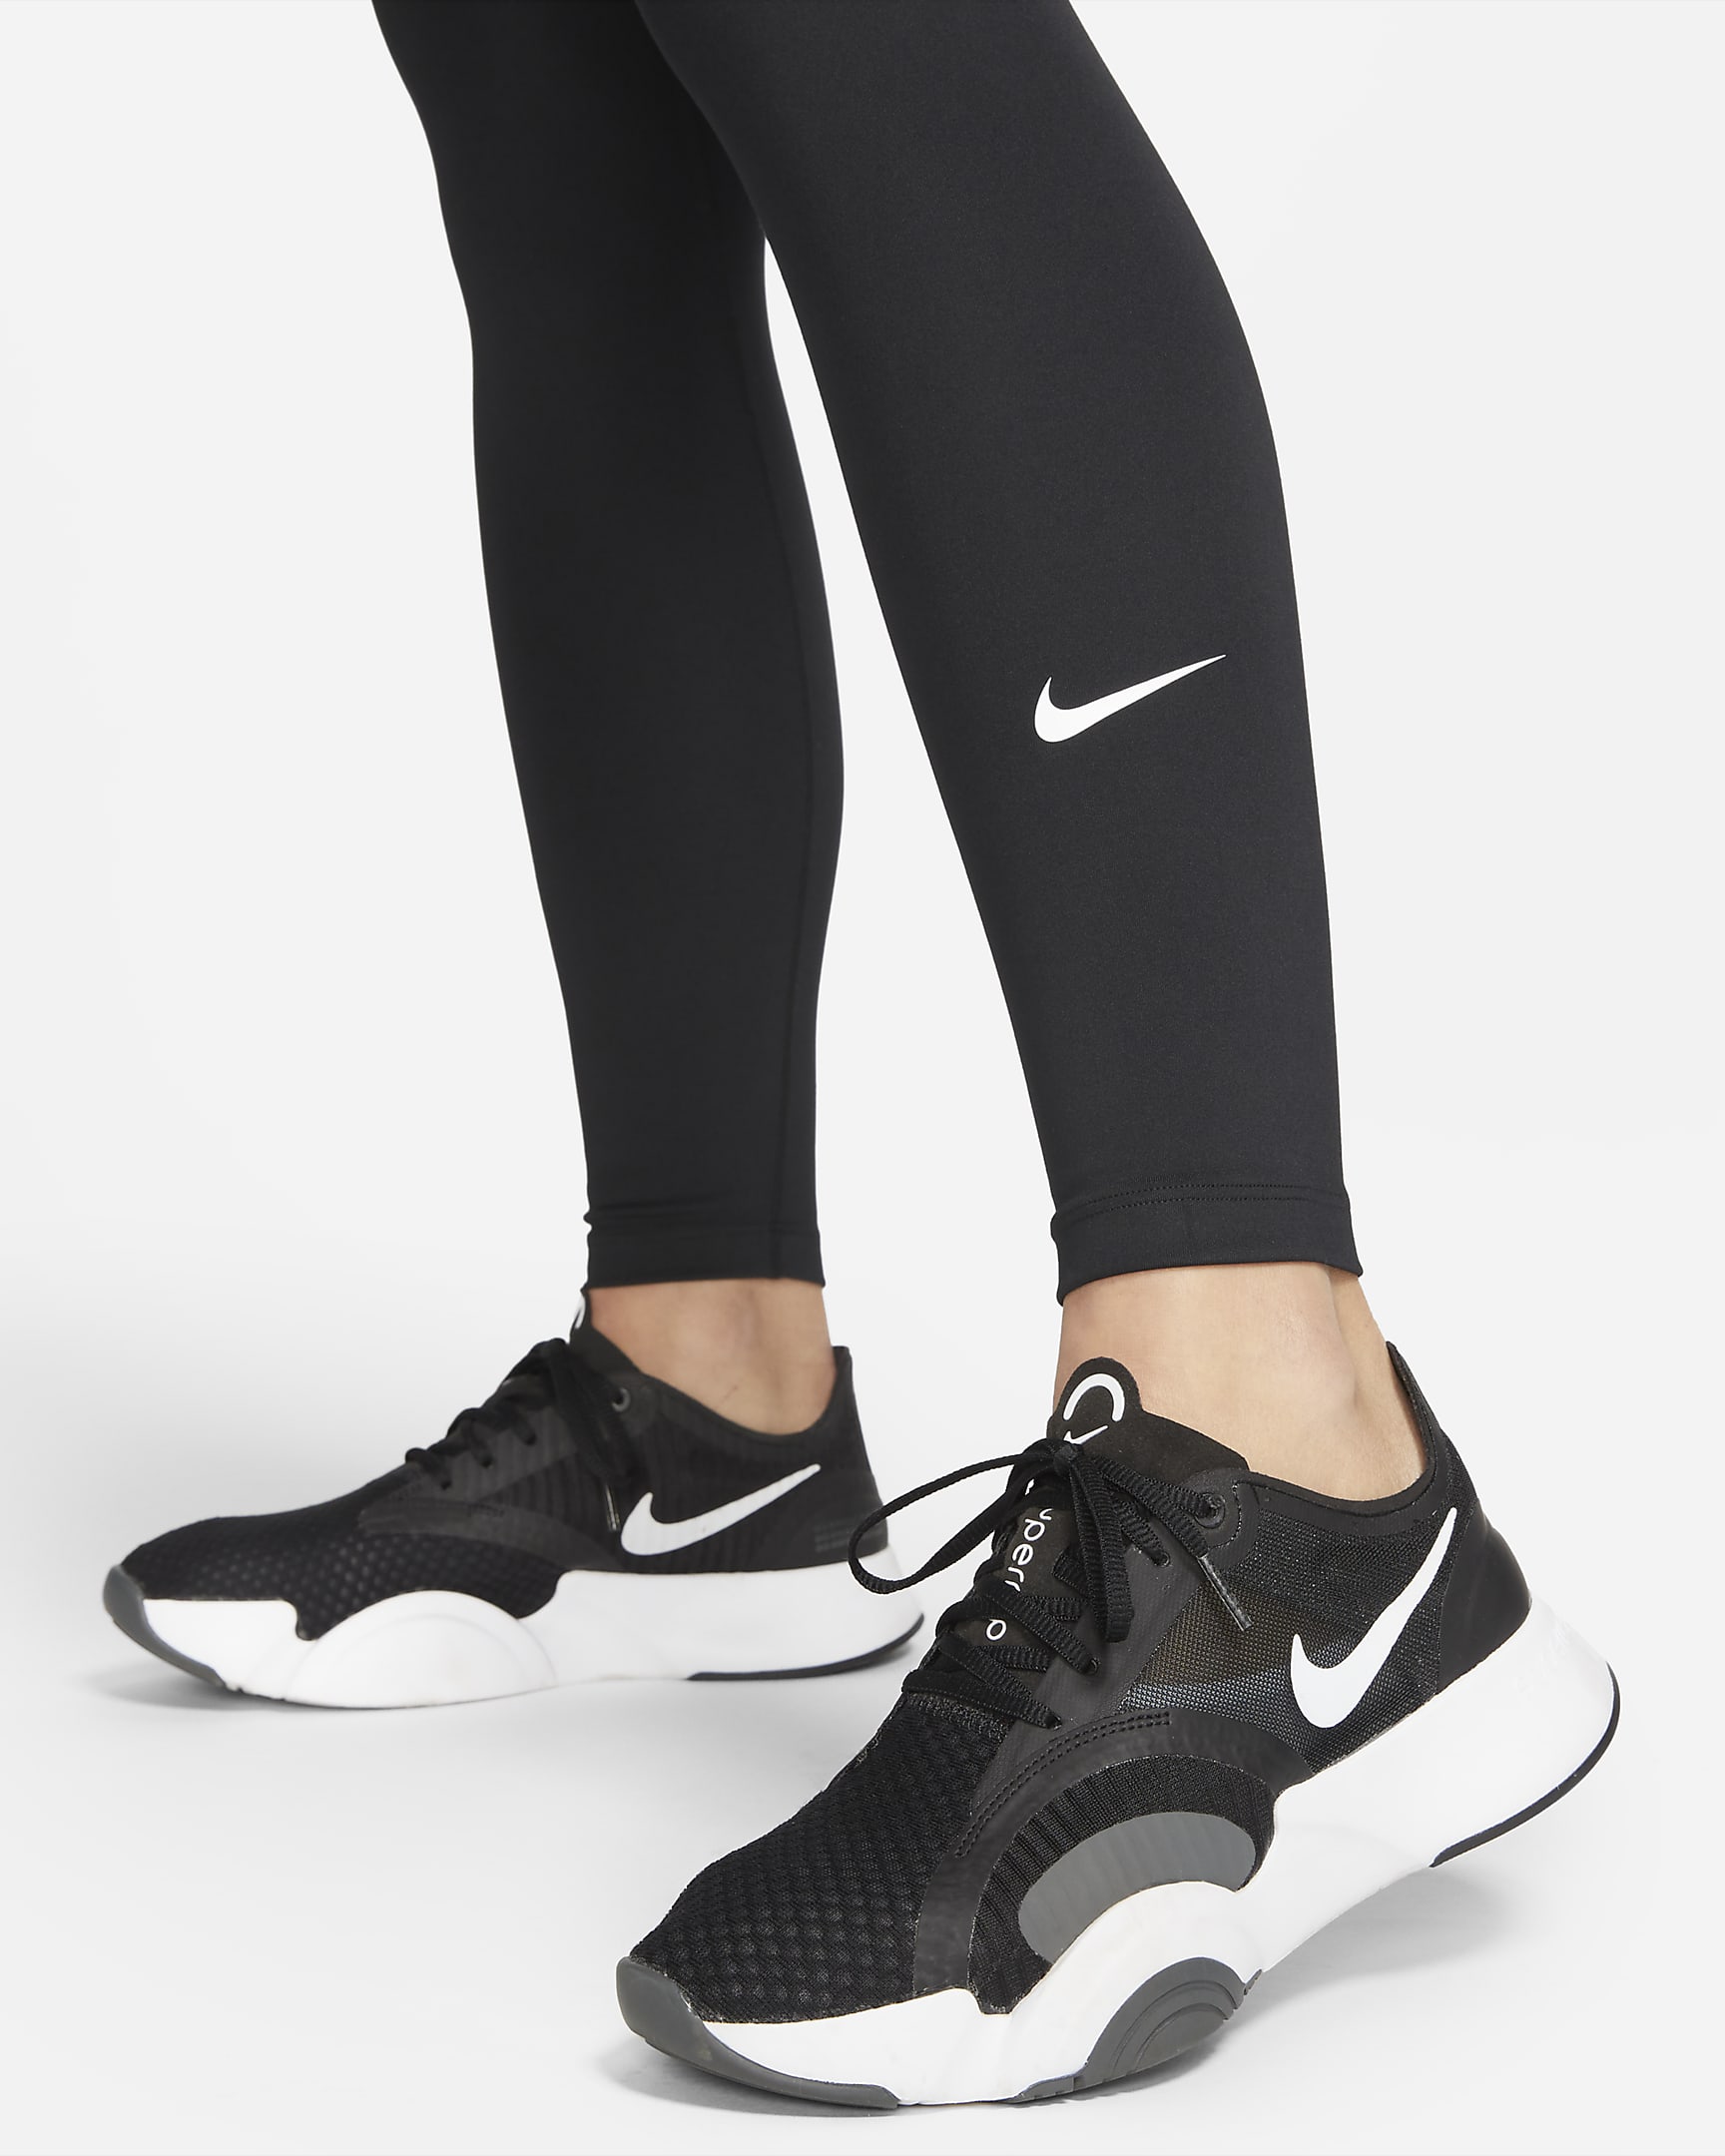 Nike One (M) Women's High-Waisted Leggings (Maternity). Nike.com